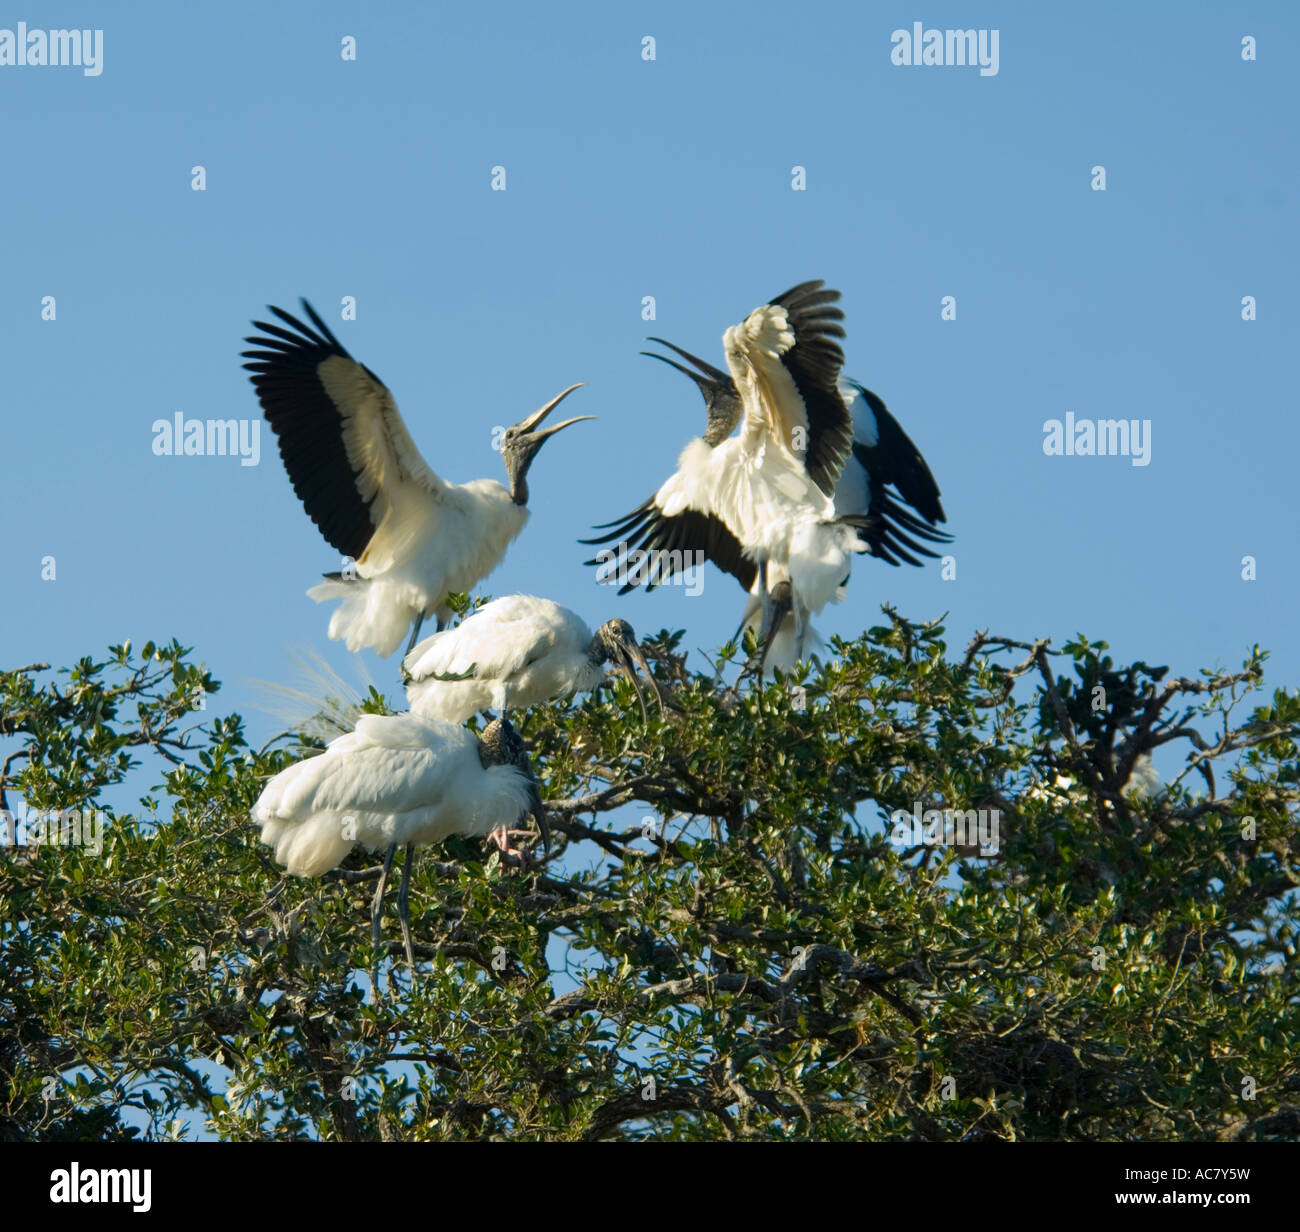 Wood Storks in courtship behaviour St Augustine Alligator Farm - Florida - USA Stock Photo